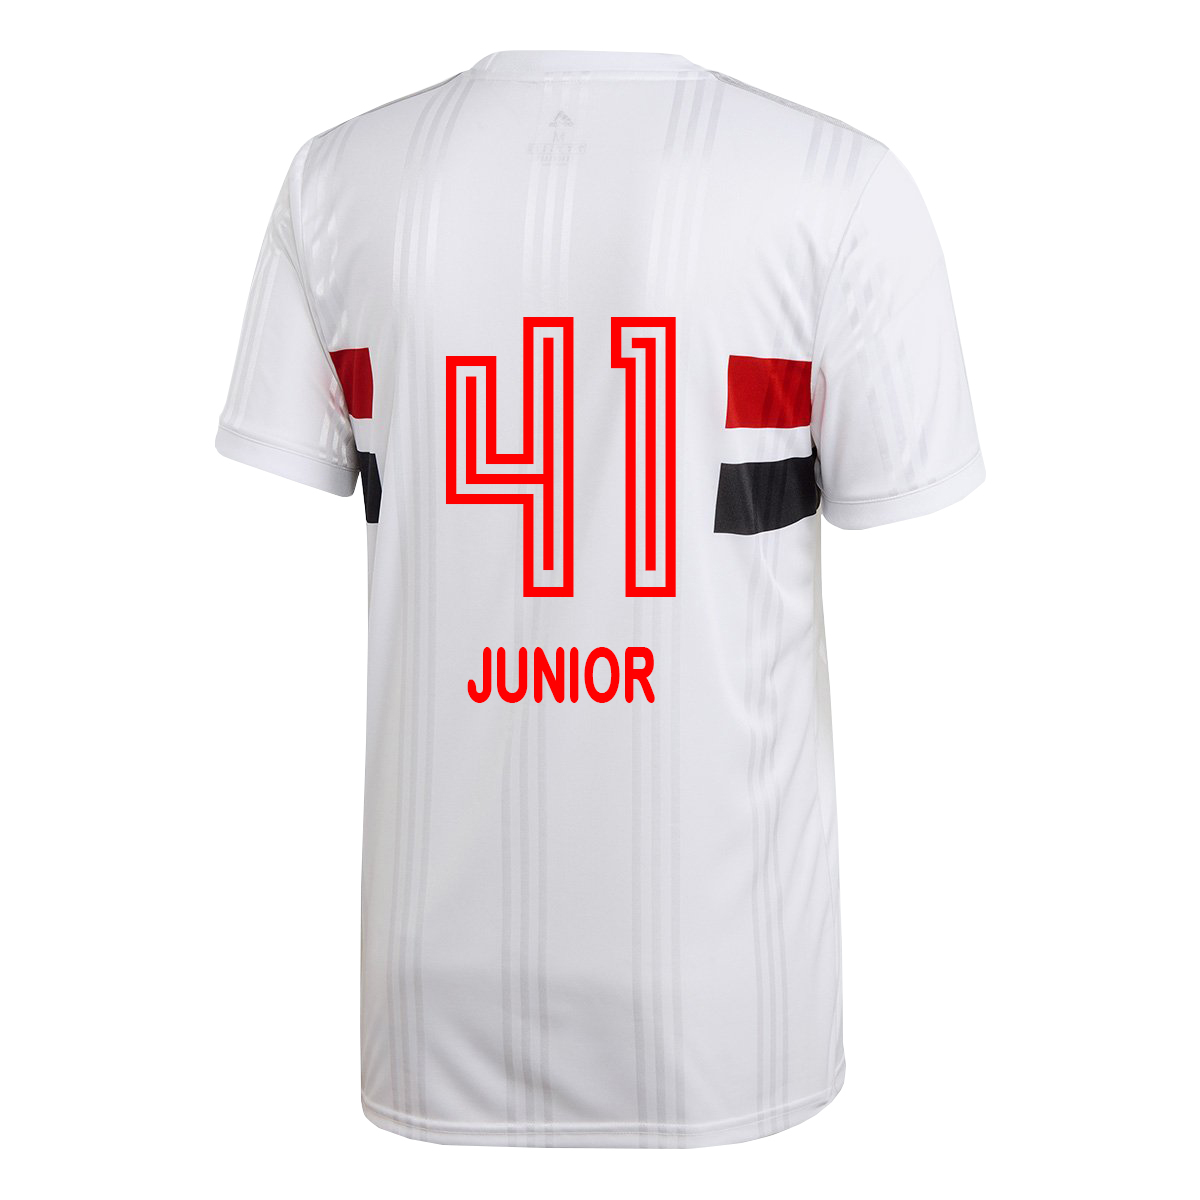 Kinder Fußball Junior #41 Heimtrikot Weiß Trikot 2020/21 Hemd